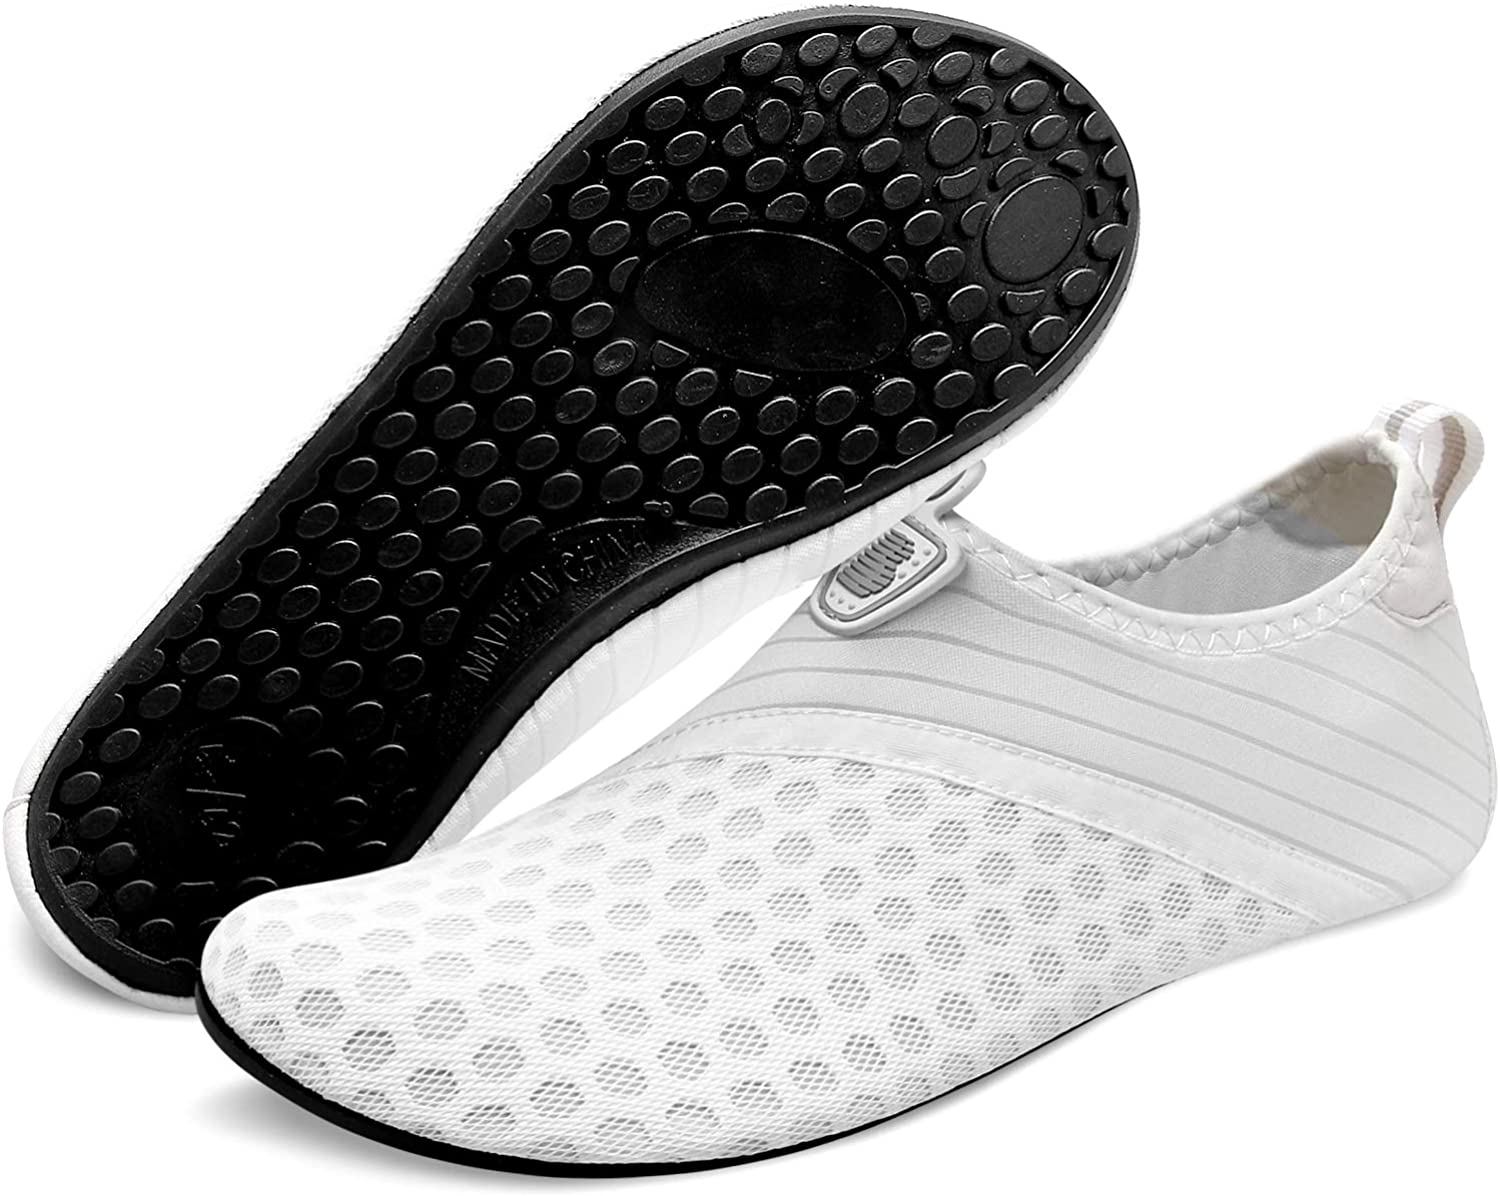 Barerun Barefoot Quick-Dry Water Sports Shoes Aqua Socks for Swim Beach Pool Surf Yoga for Women Men 